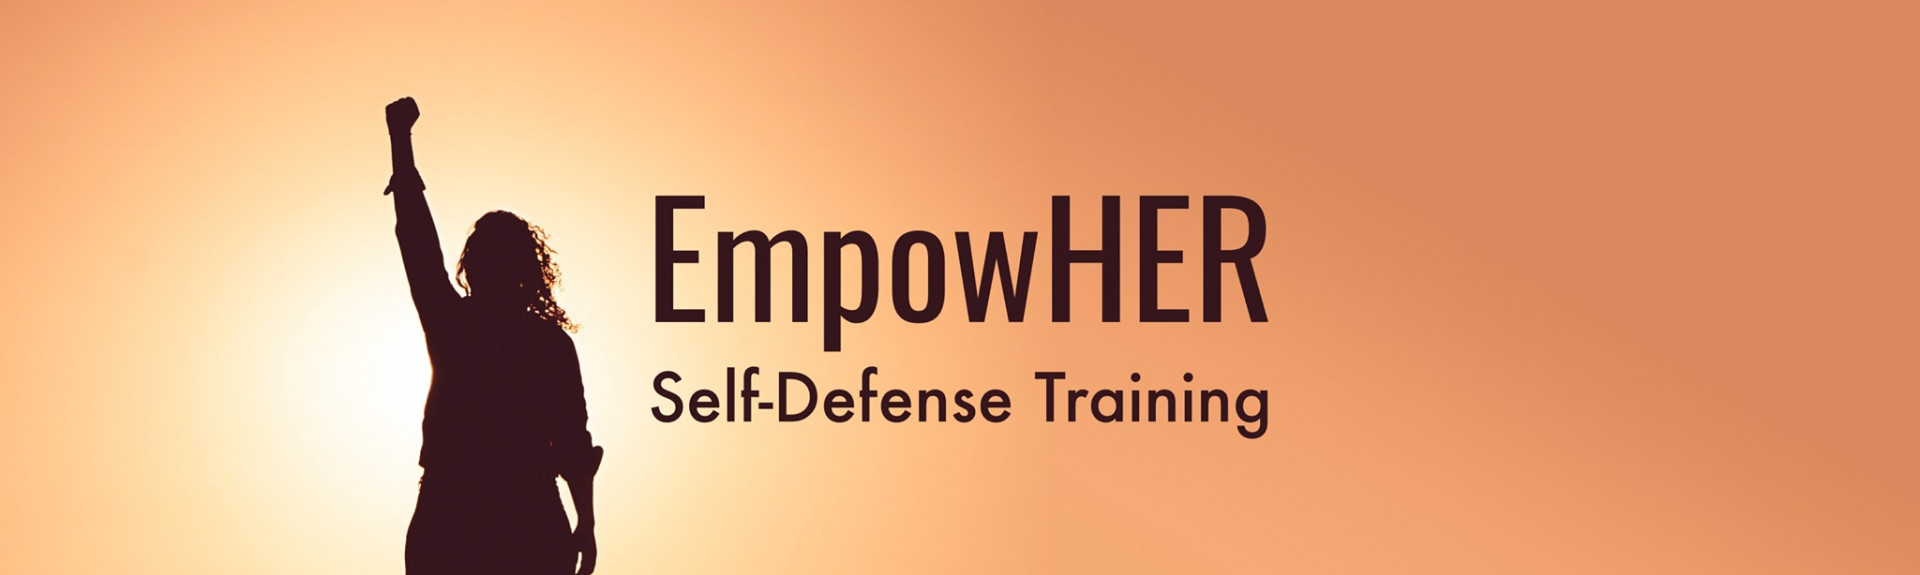 EmpowHER: Self-Defense Training